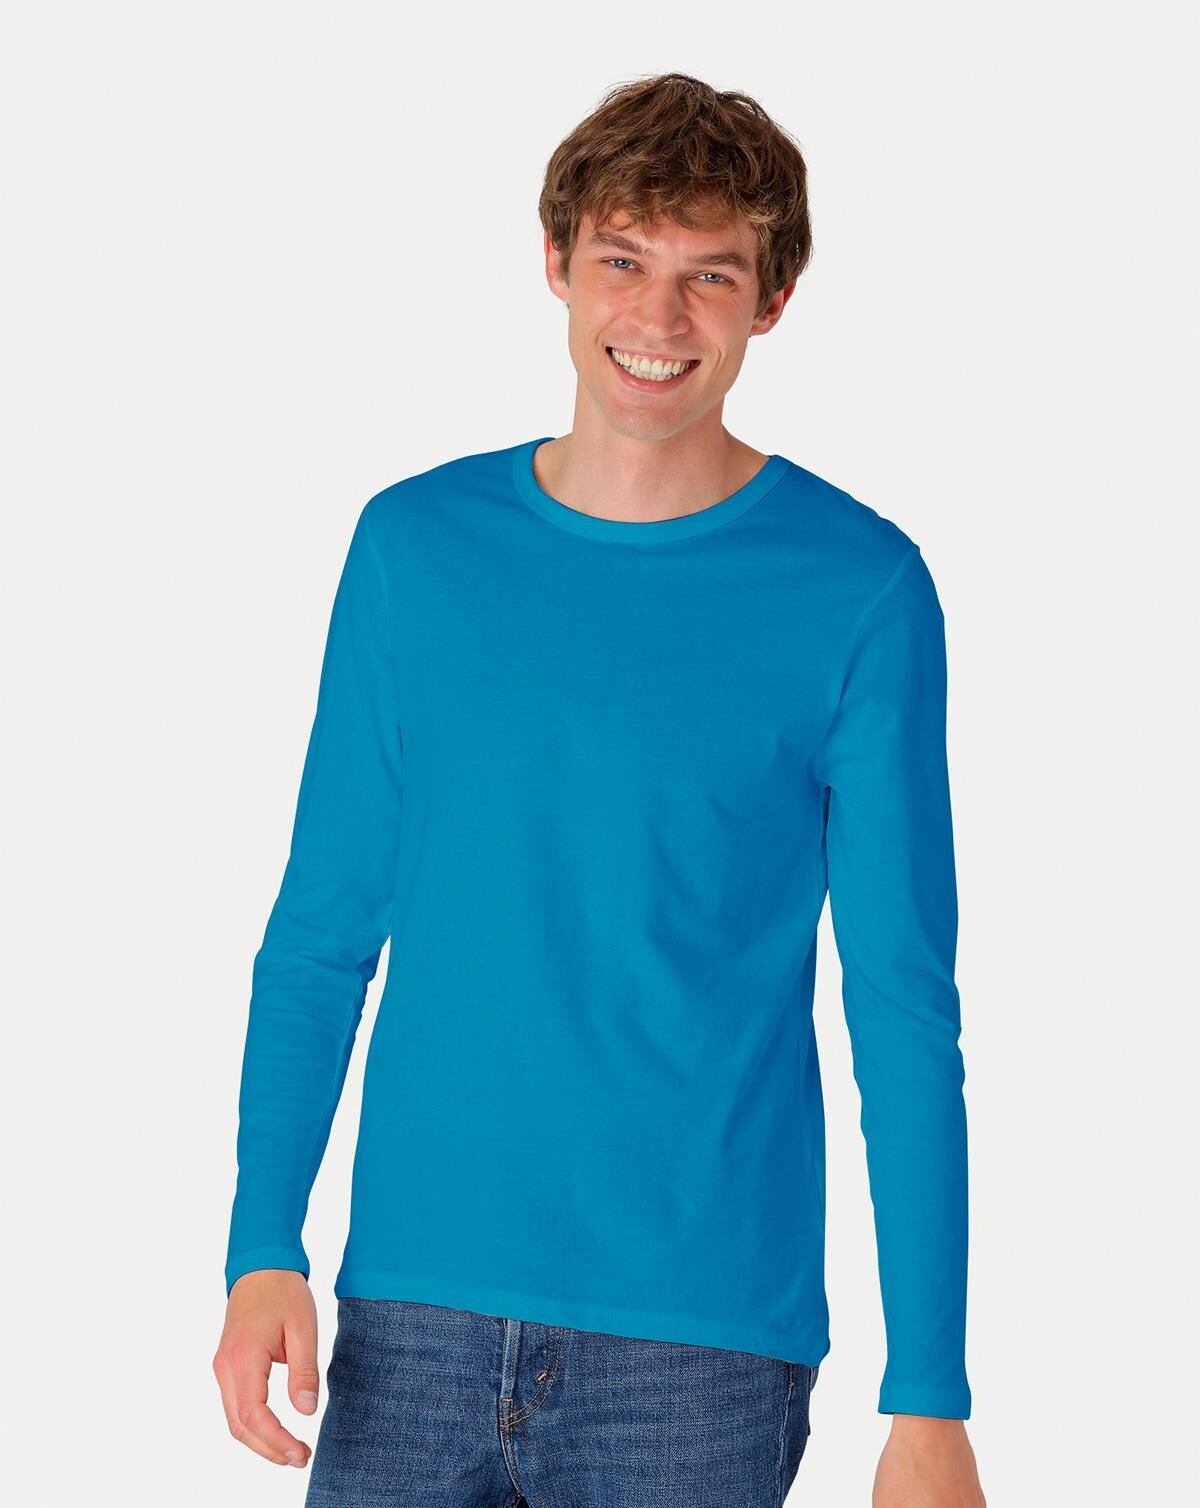 Neutral Organic - Mens Long Sleeve T-shirt (Safir, S)